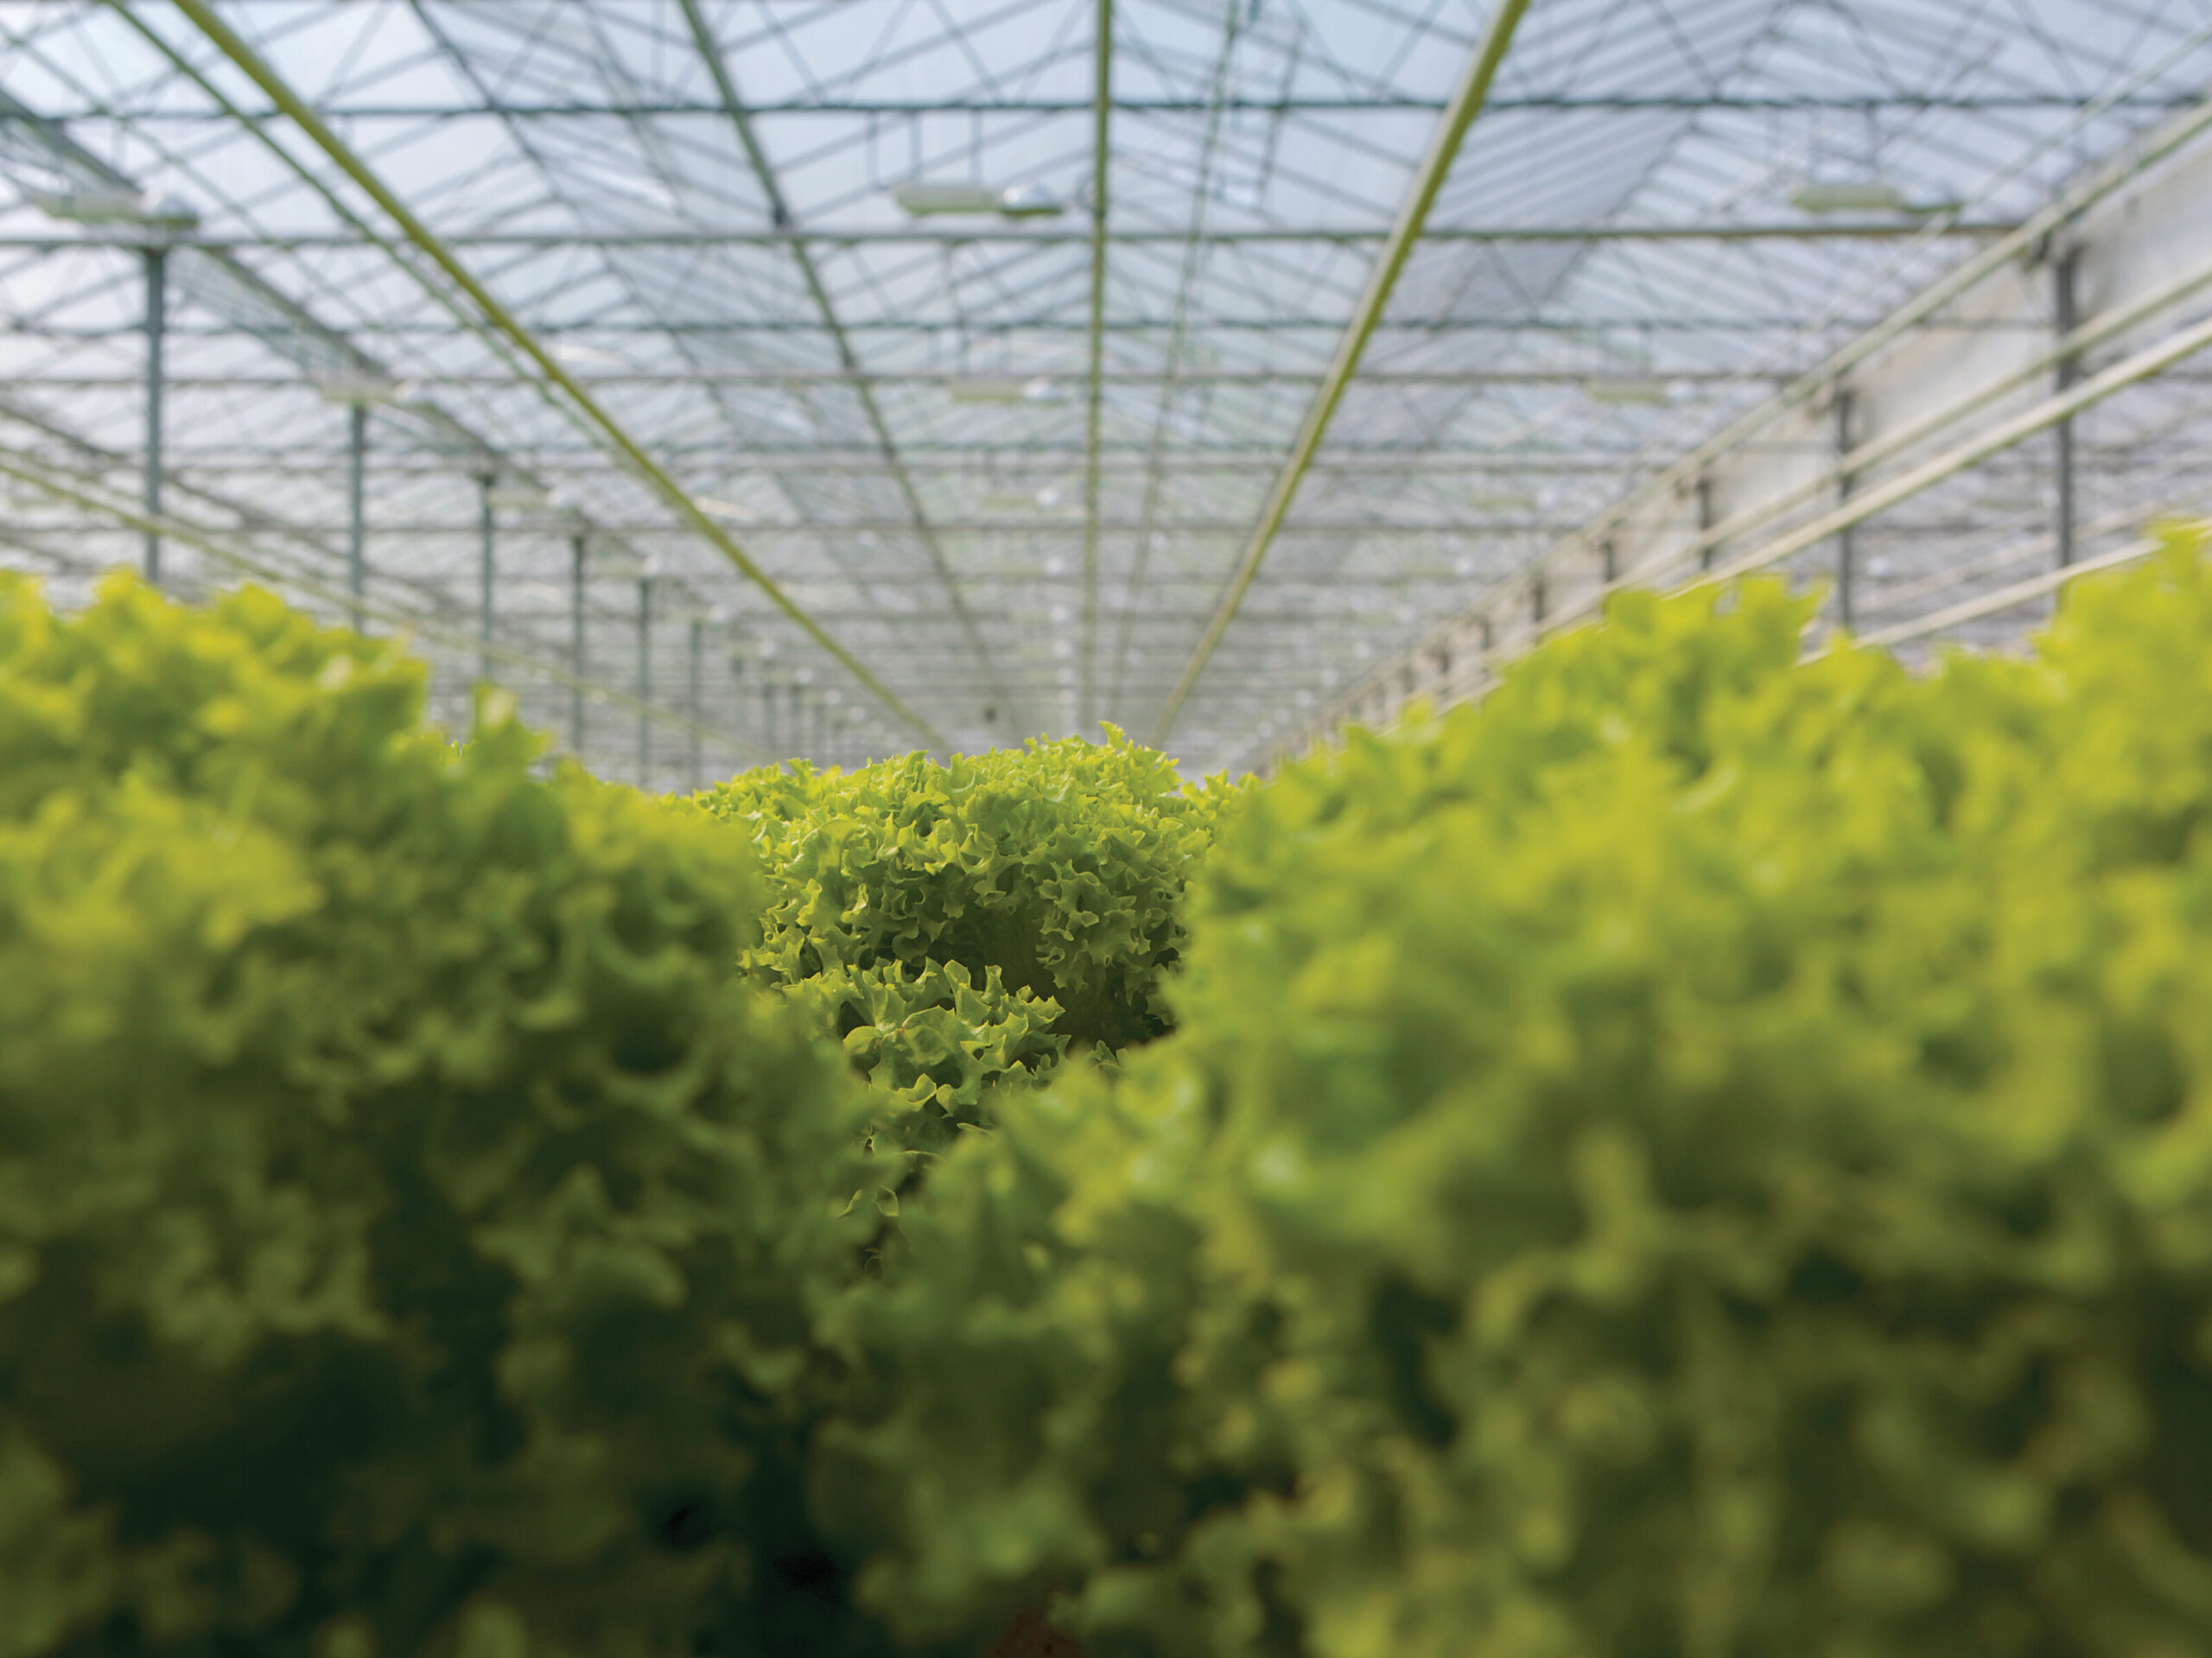 lettuce production inside greenhouse farming operation